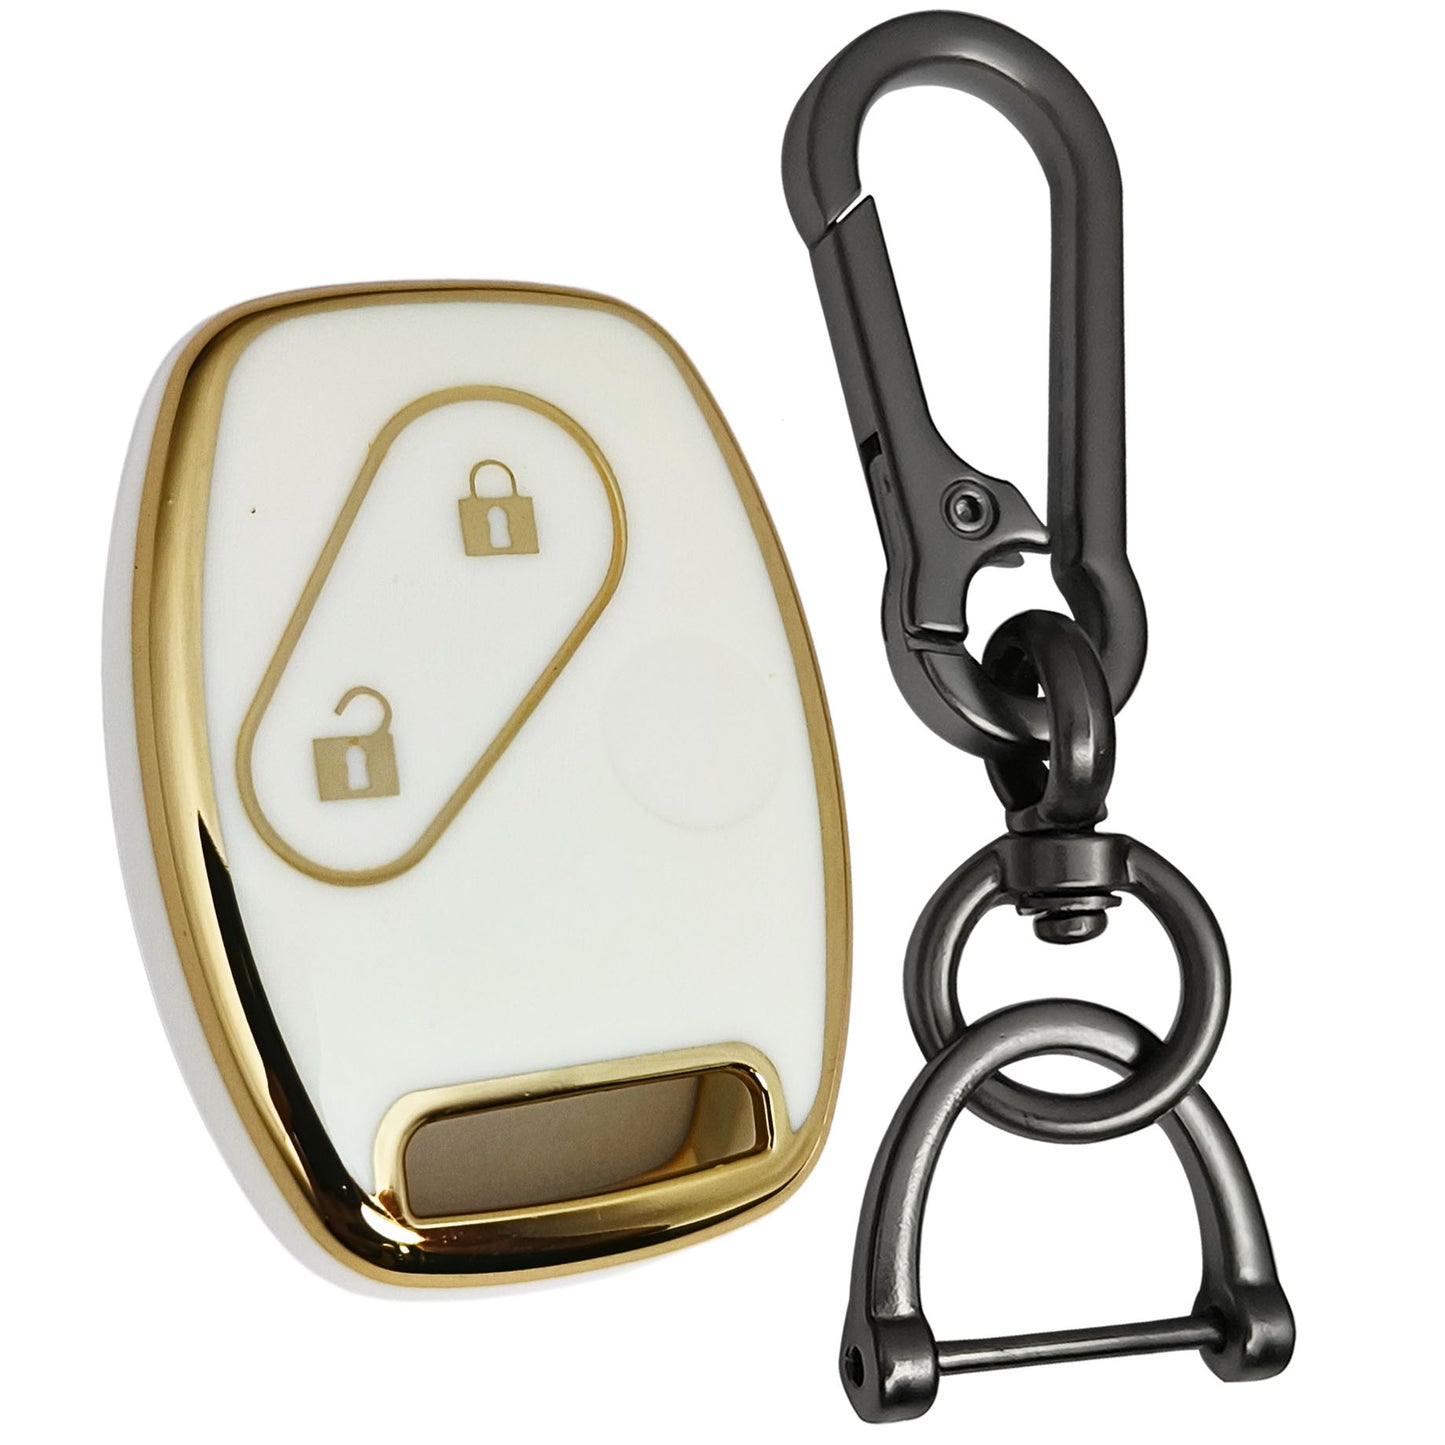 honda accord city civic amaze 2 button remote tpu white gold key accessories keychain